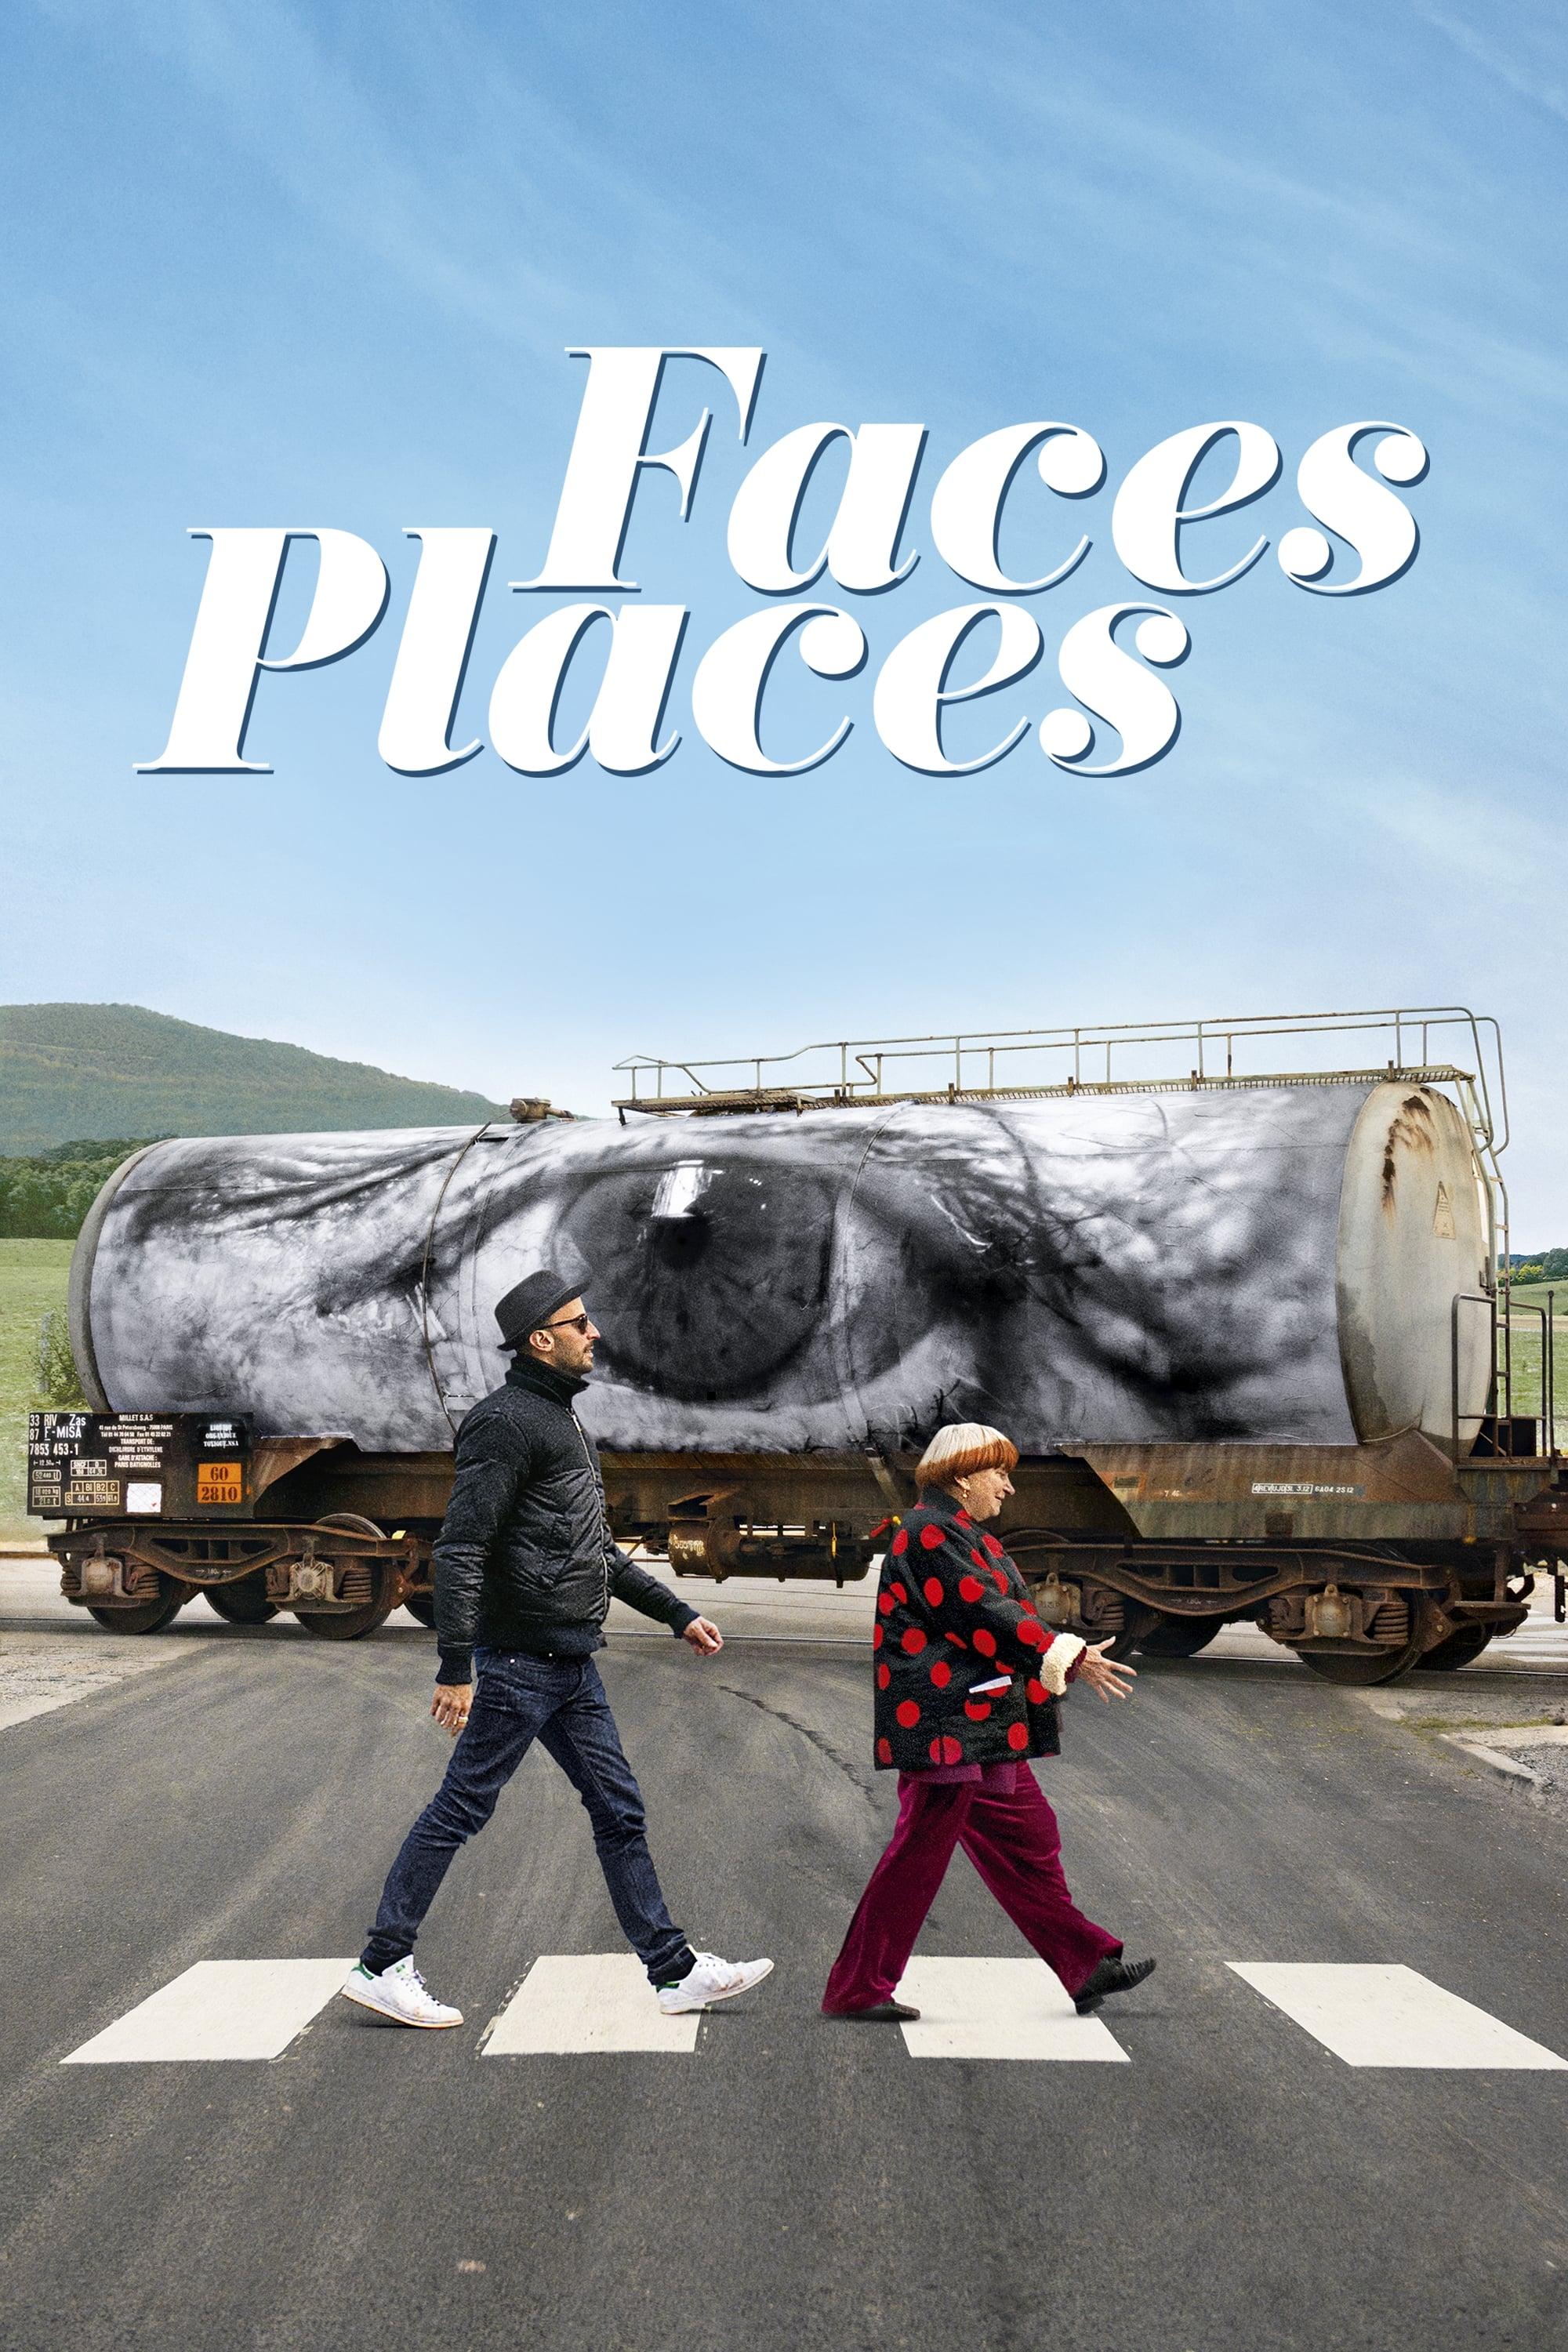 Faces Places poster